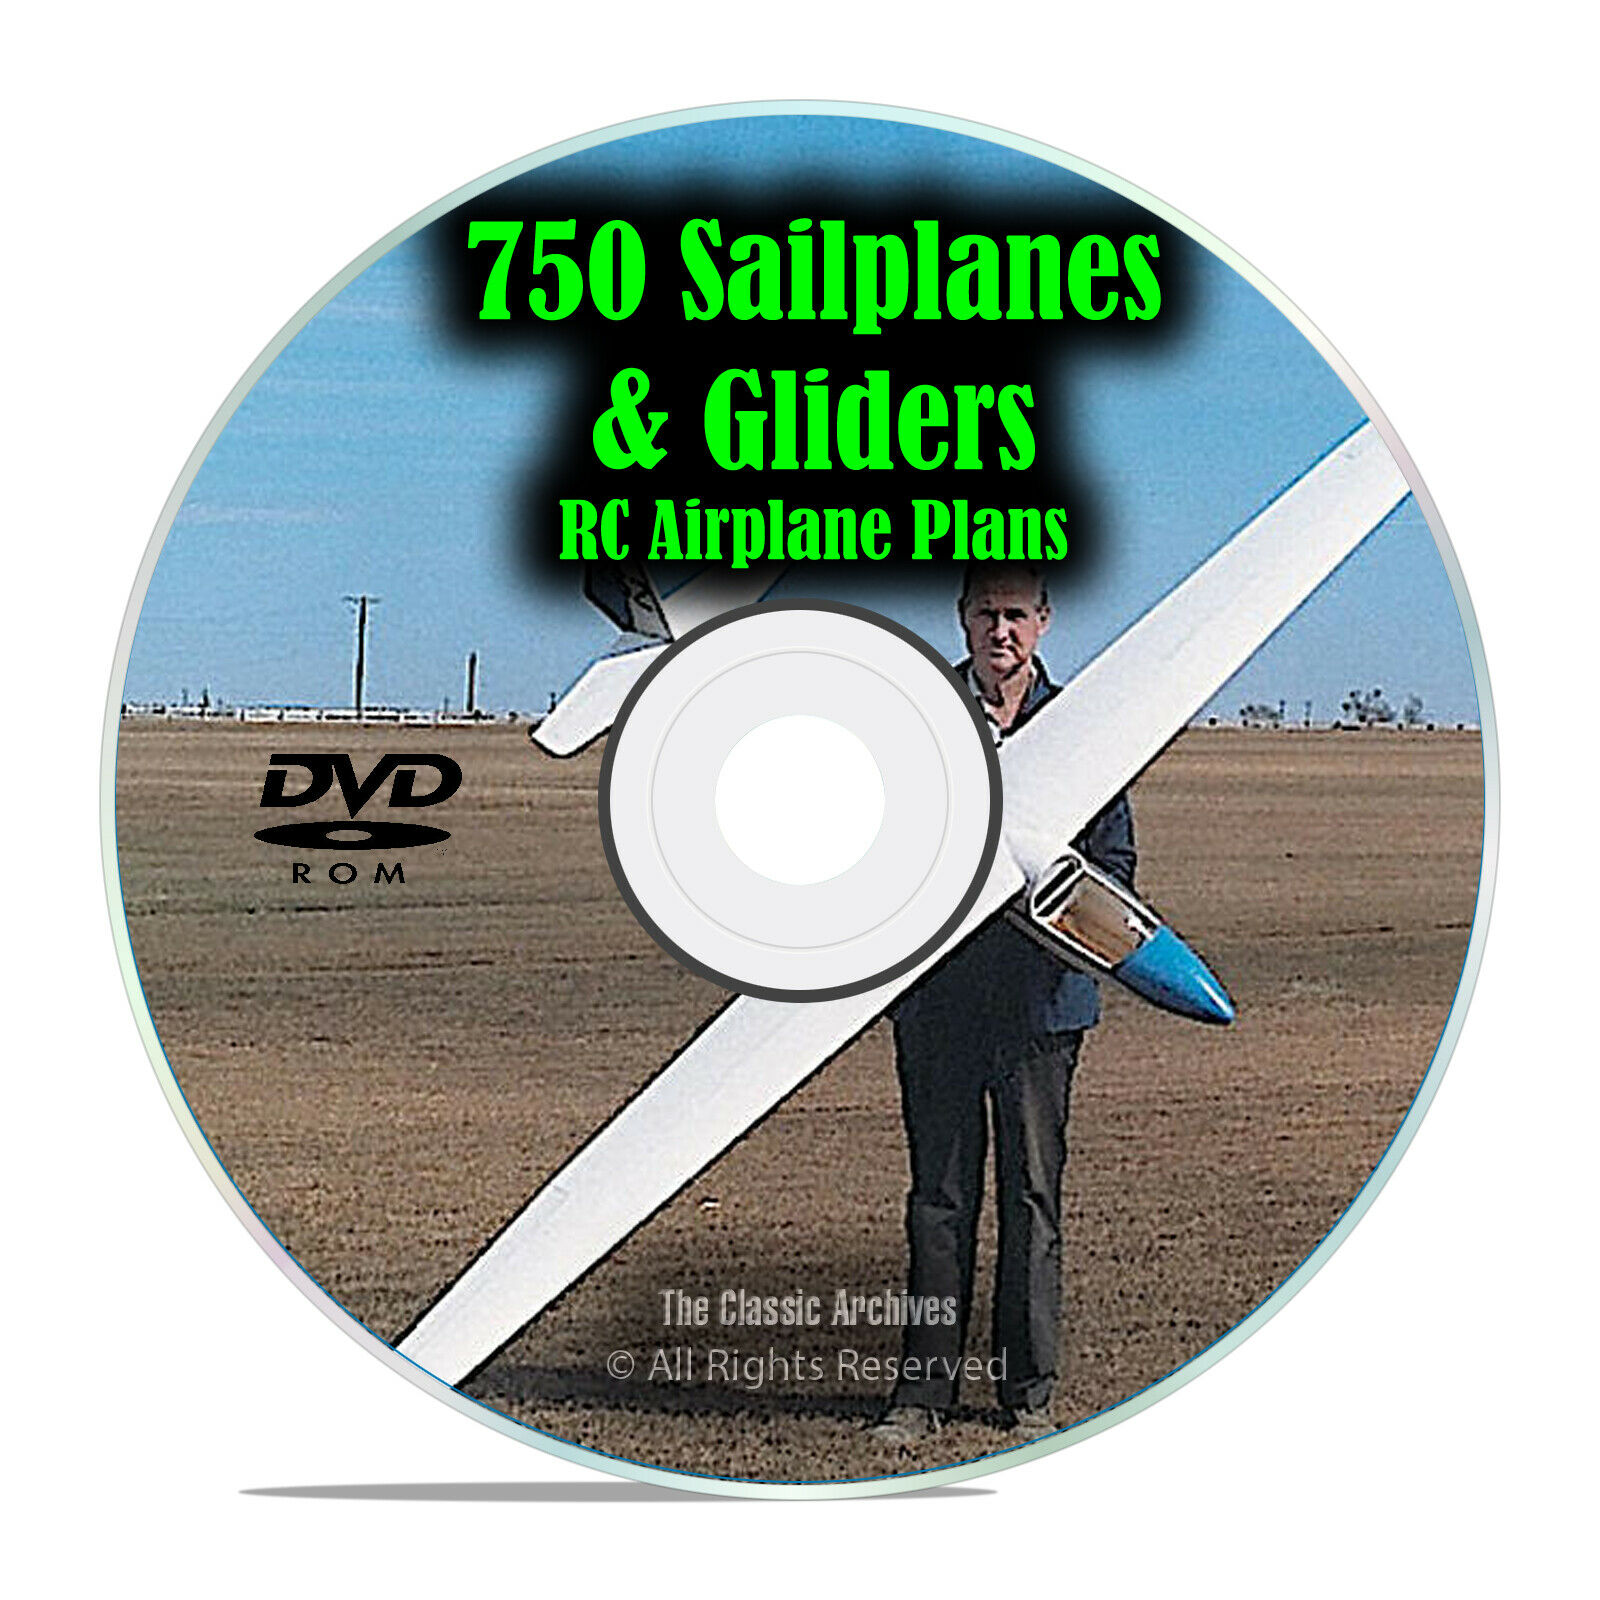 750 Sailplanes & Gliders, Remote Control Rc Radio Model Airplane Plans, Dvd I22